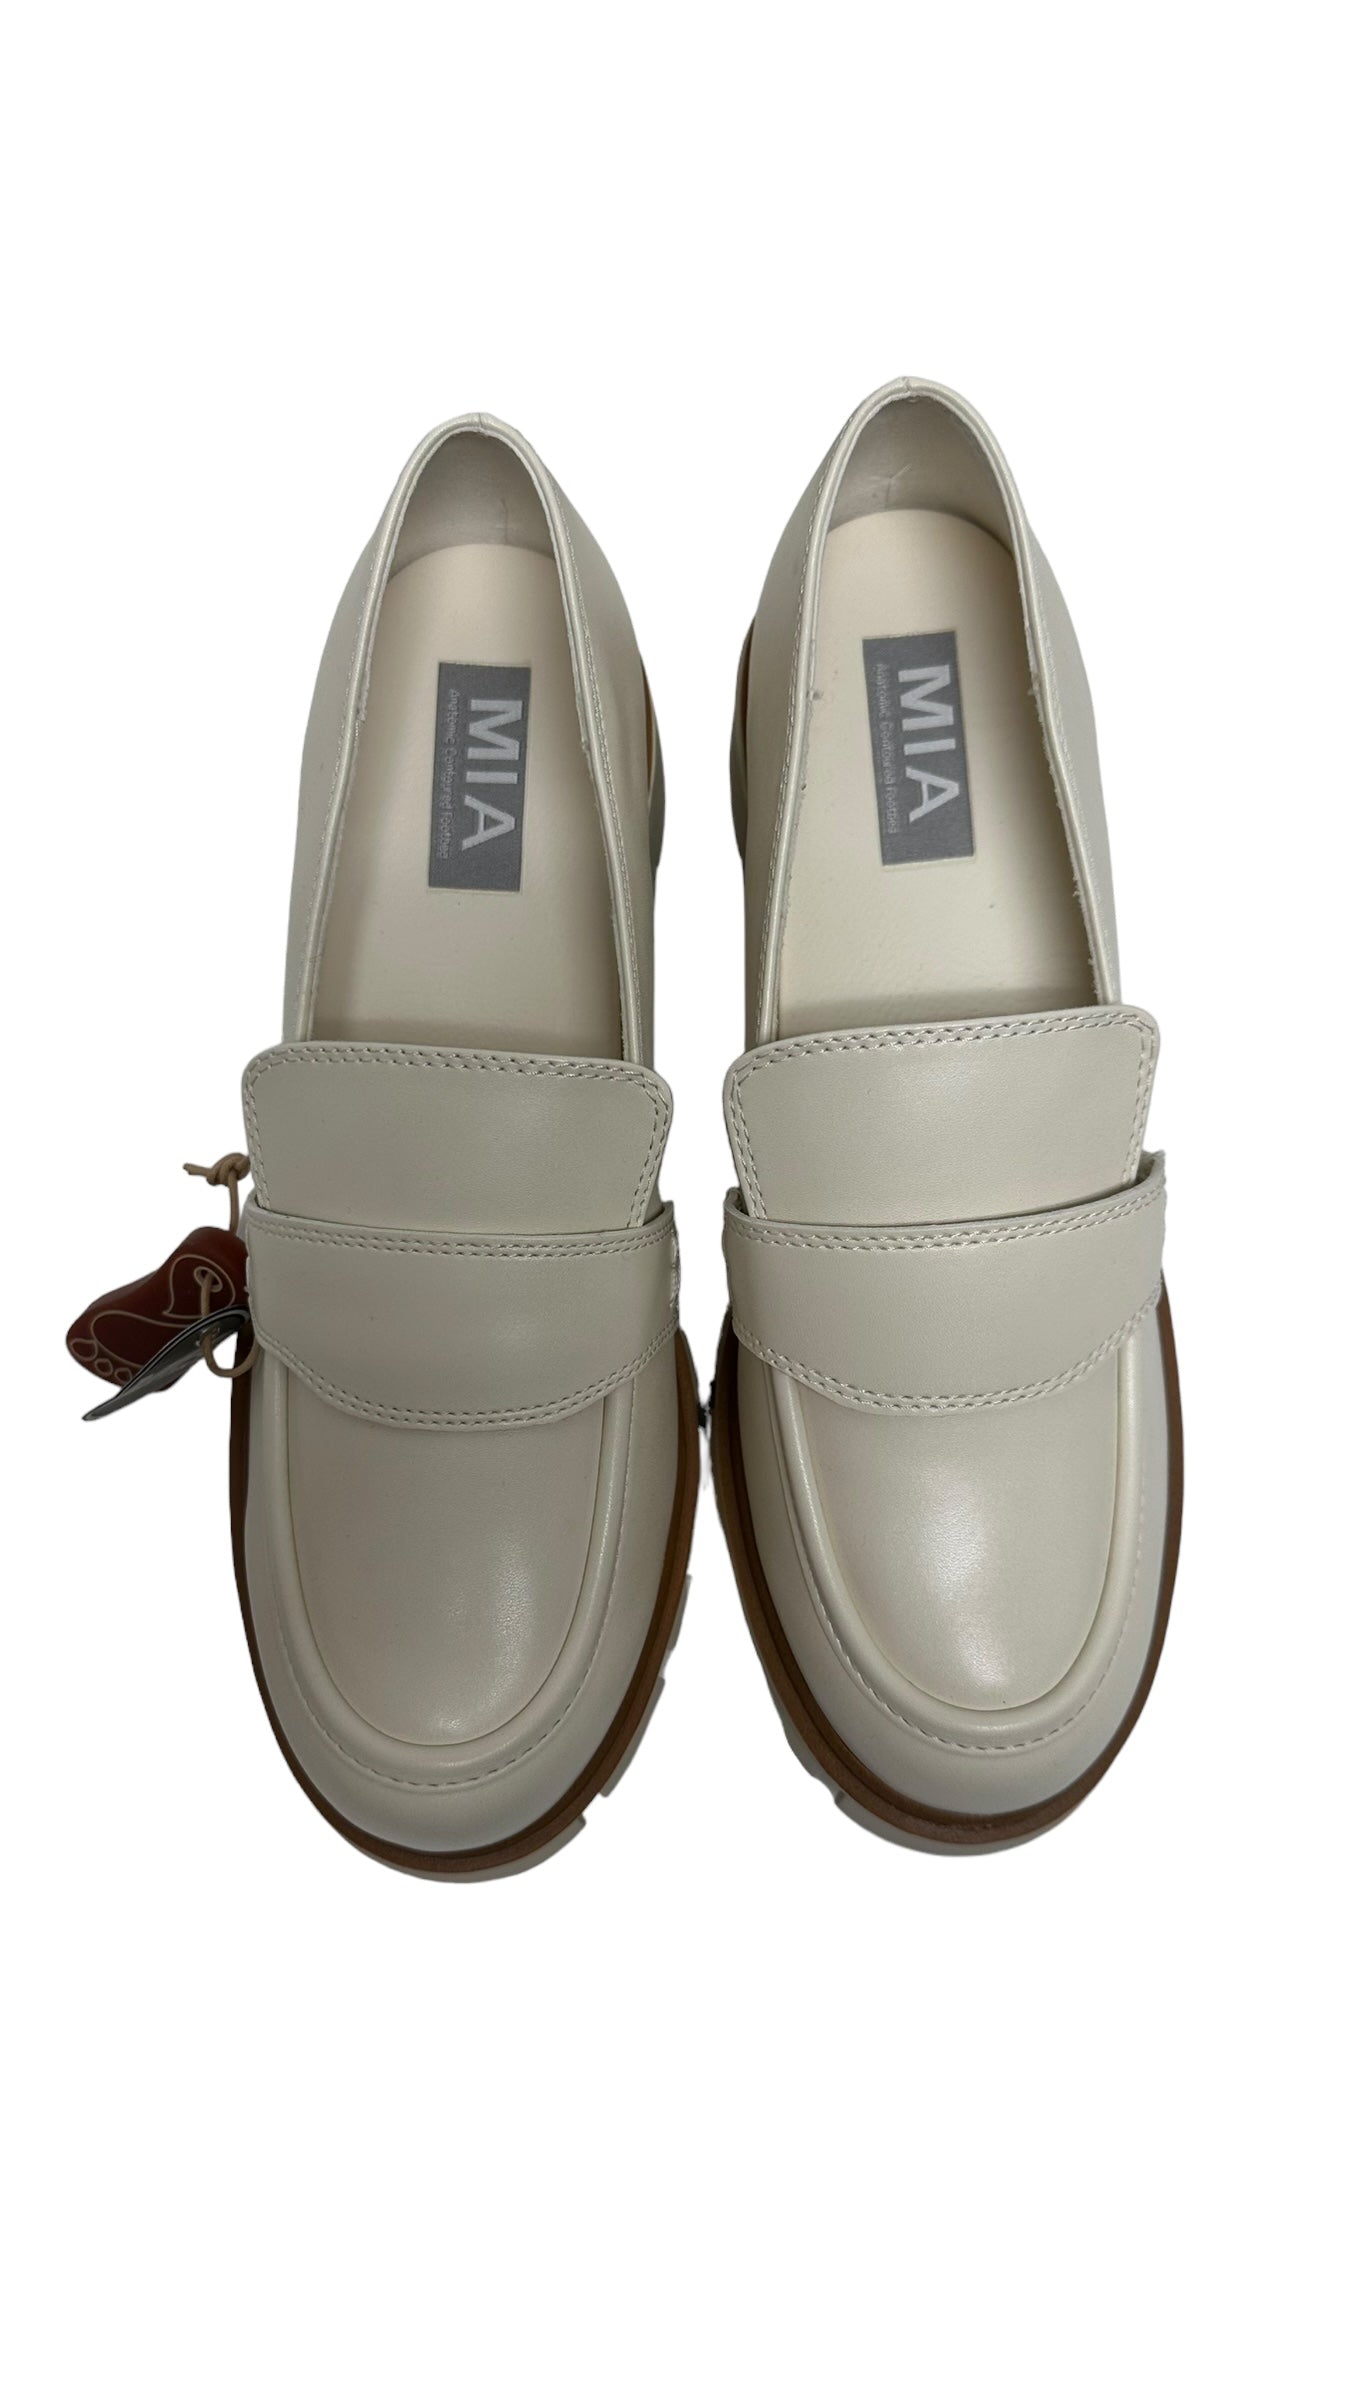 Cream Shoes Heels Block Mia, Size 9